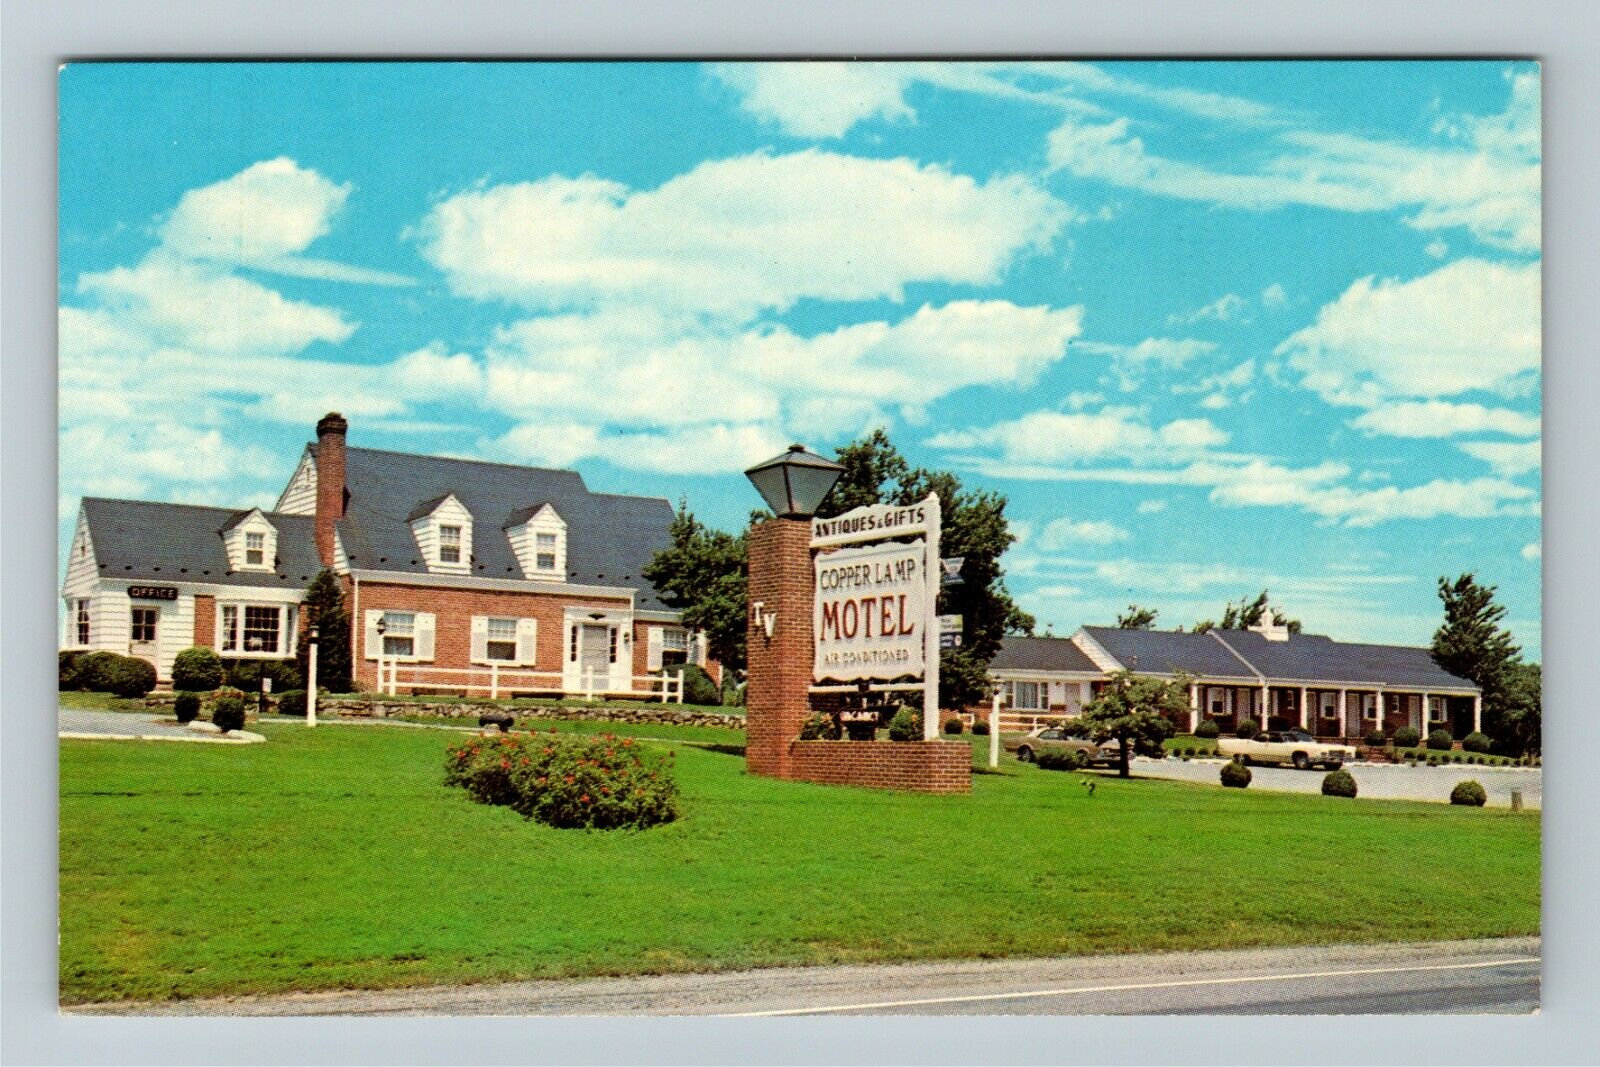 Winchester VA-Virginia, Copper Lamp Motel, Antique Vintage Souvenir Postcard